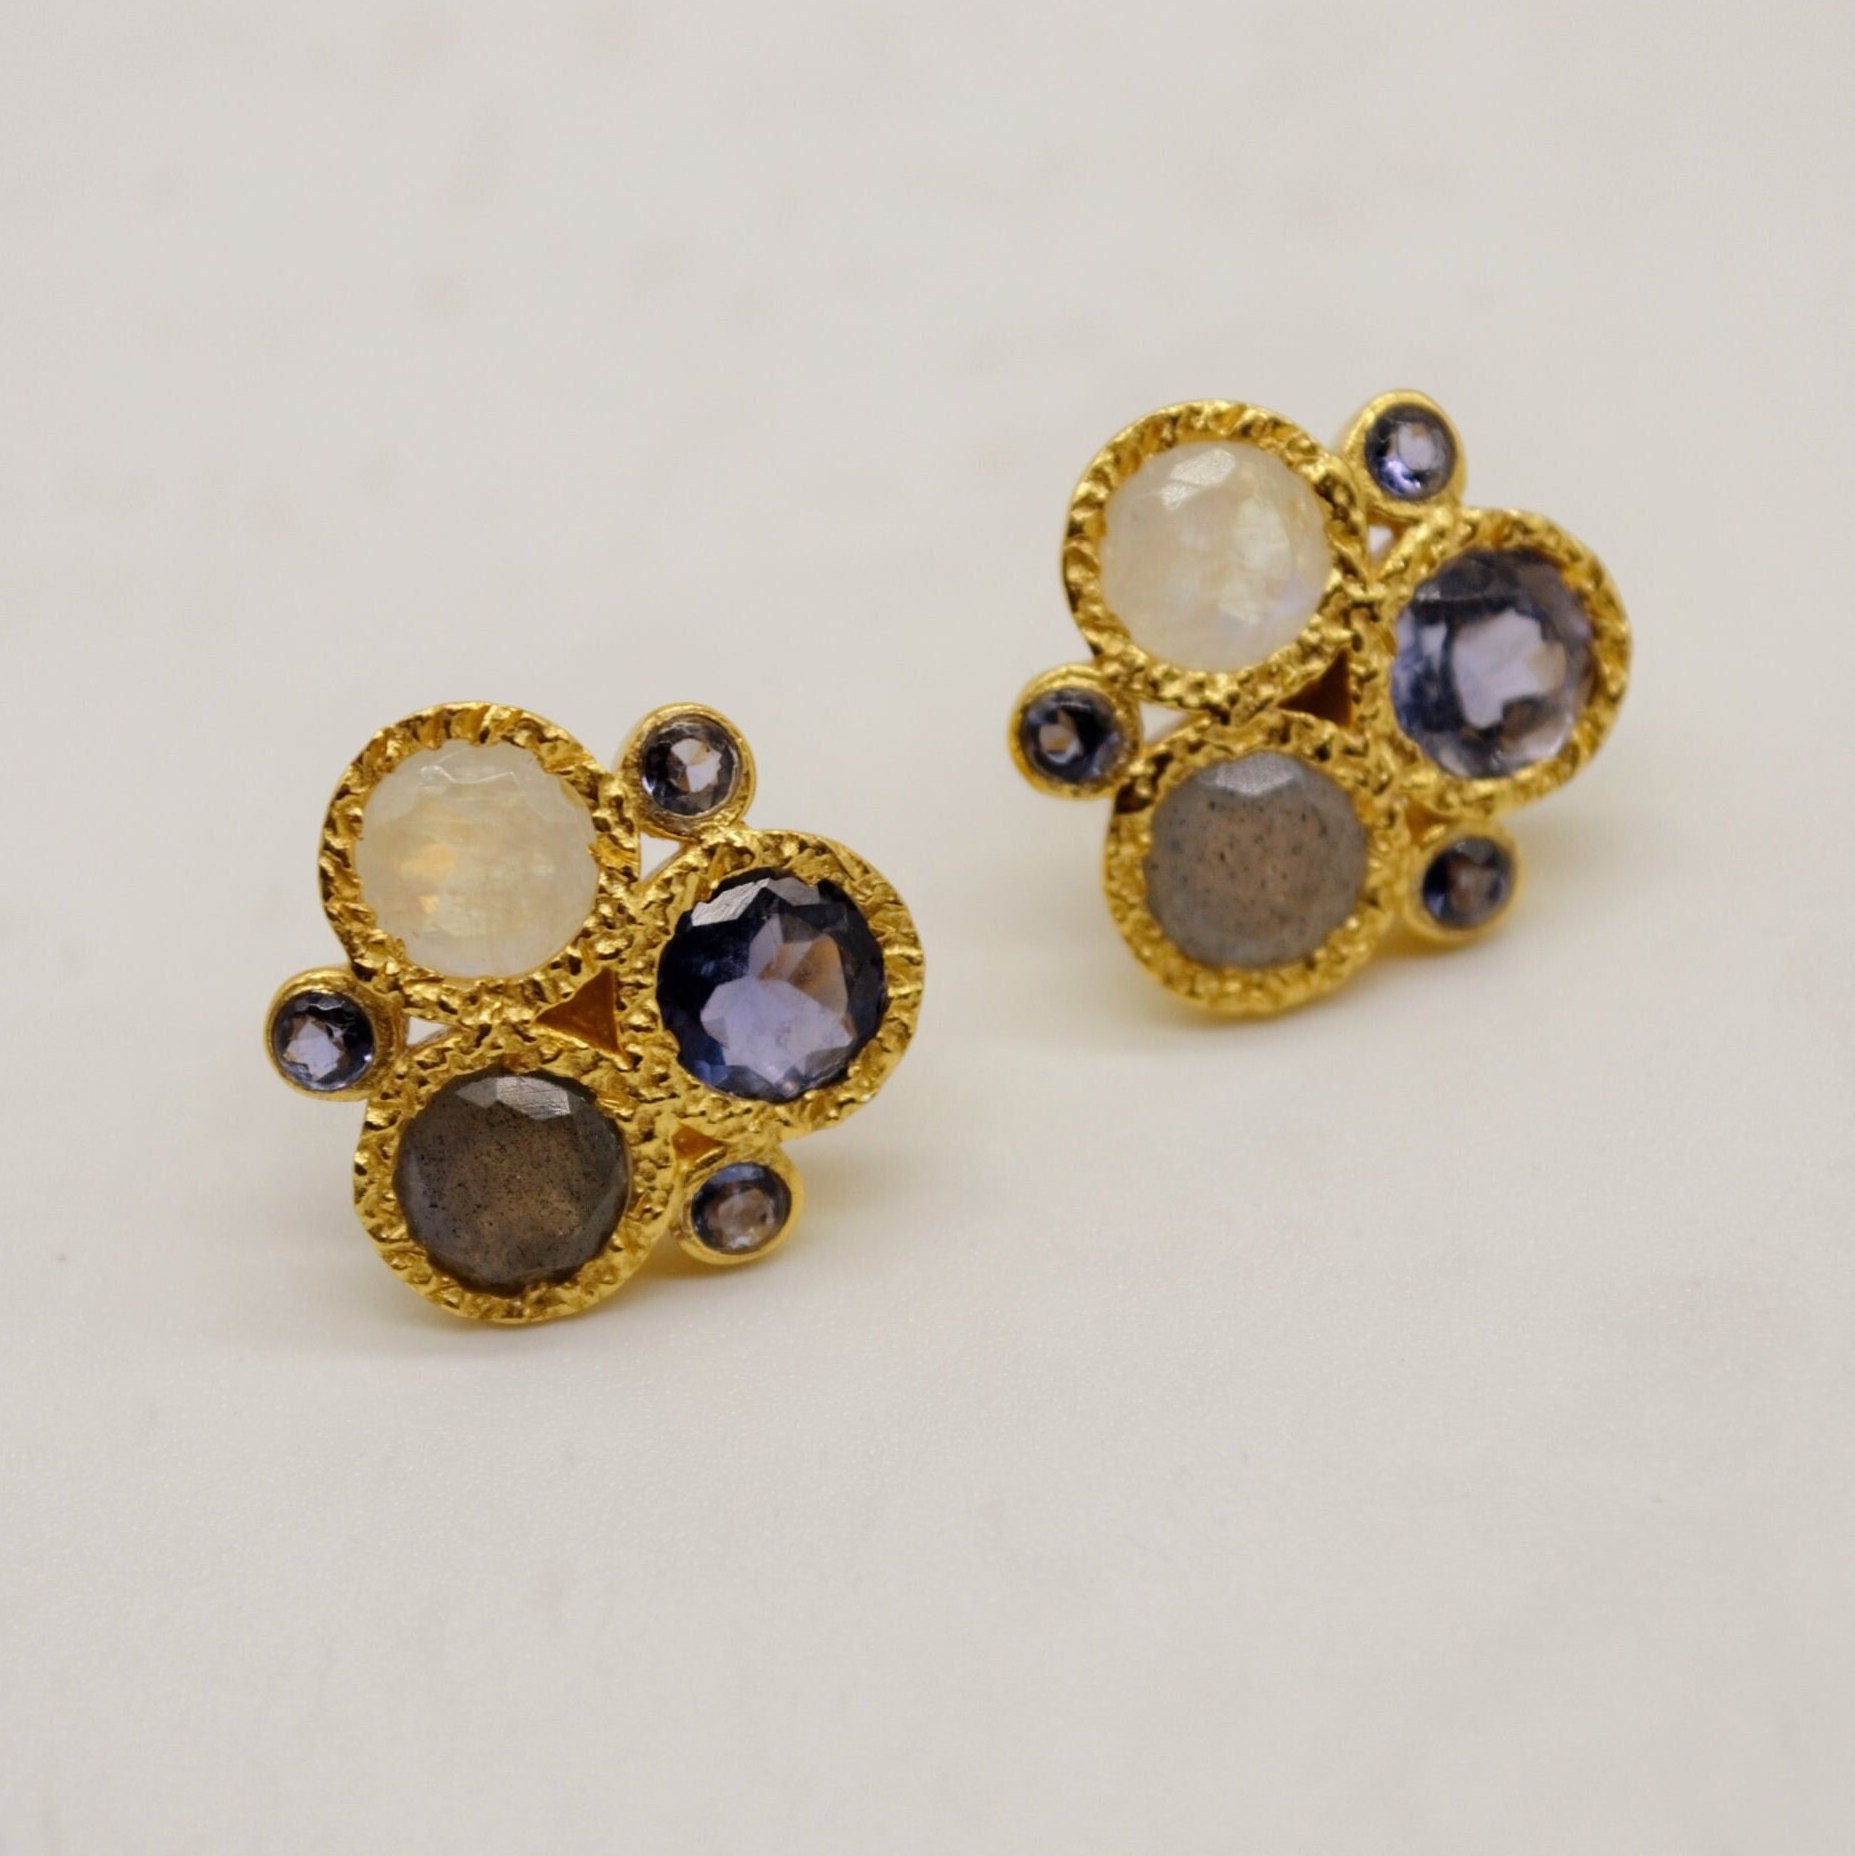 Labradorite, Moonstone, Amethyst Earrings, Gold Plated Sterling Silver Stud Earrings, Unique Birthstone Gemstone Earrings